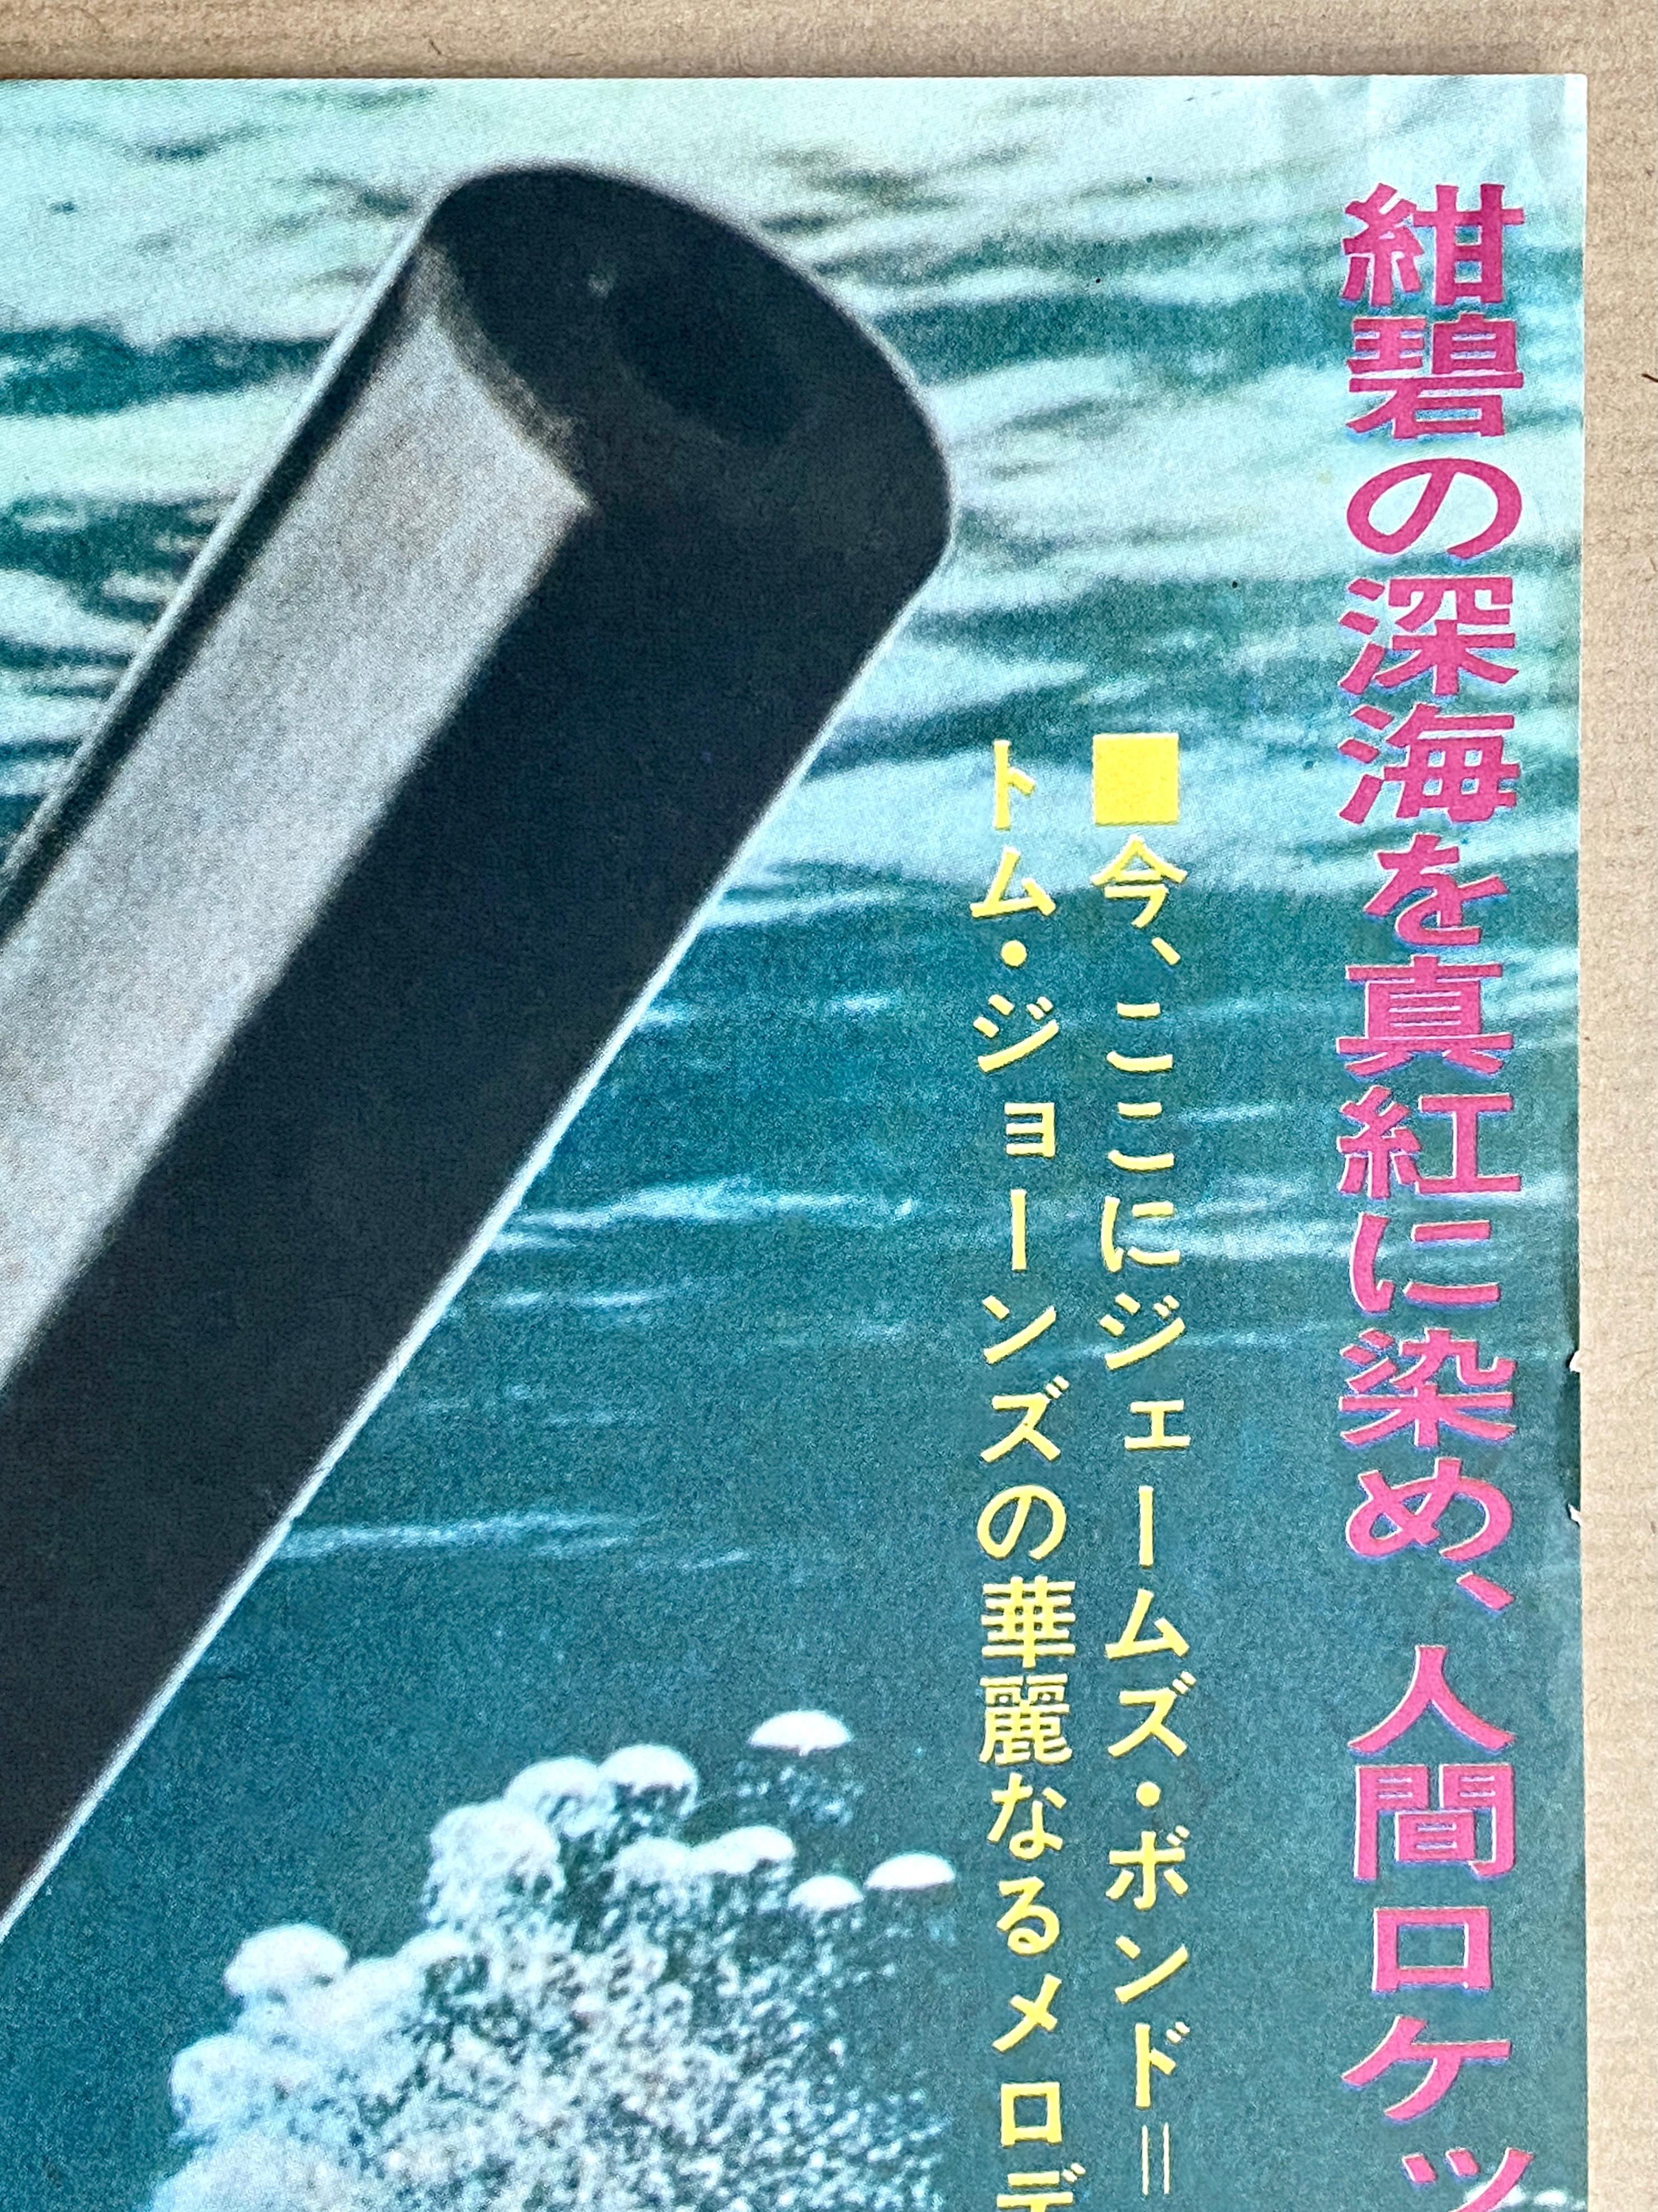 james bond japanese poster